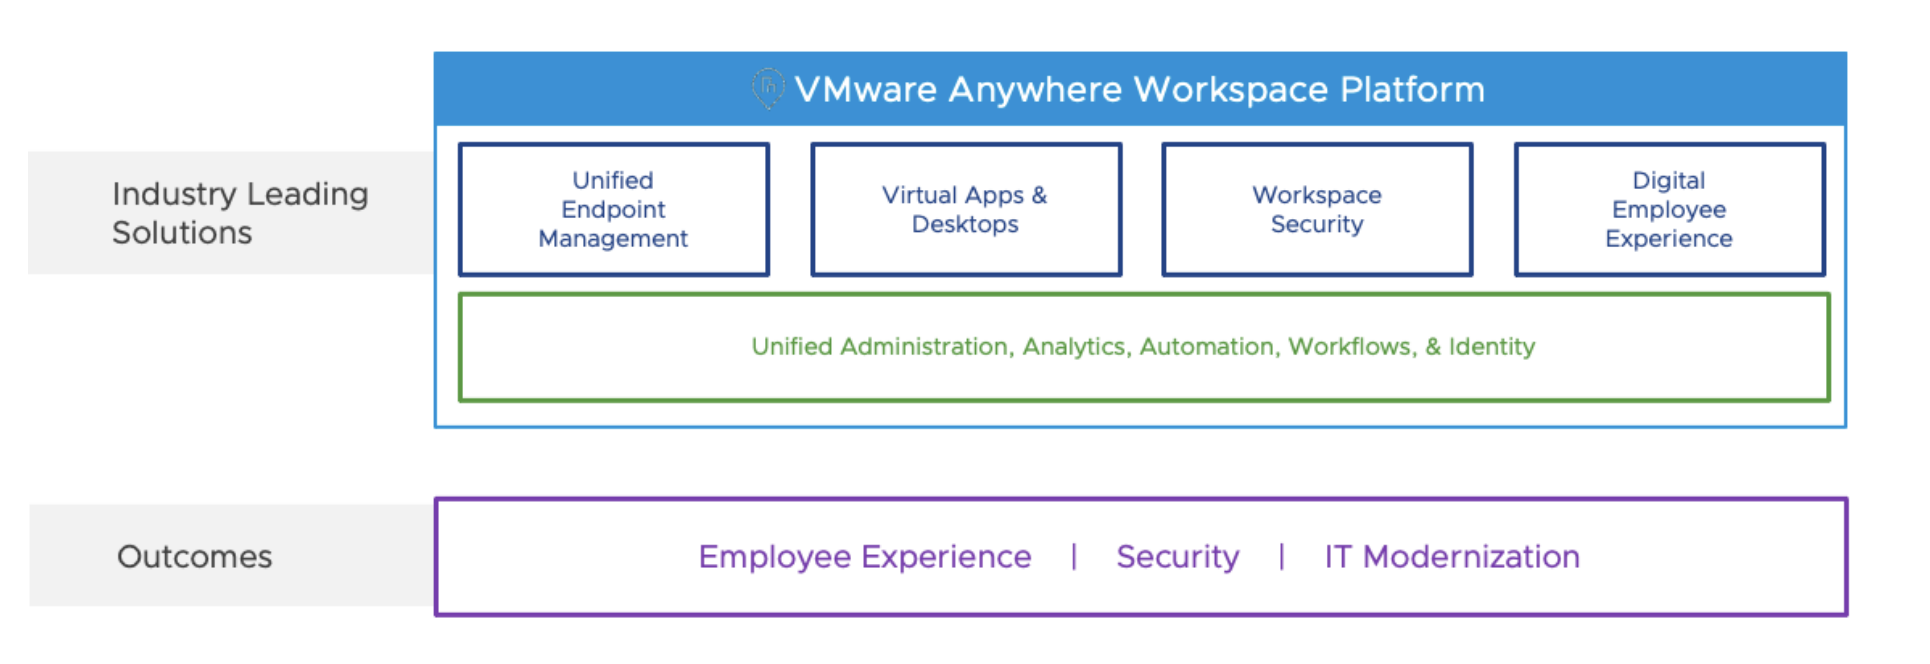 VMware Anywhere Workspace Platform